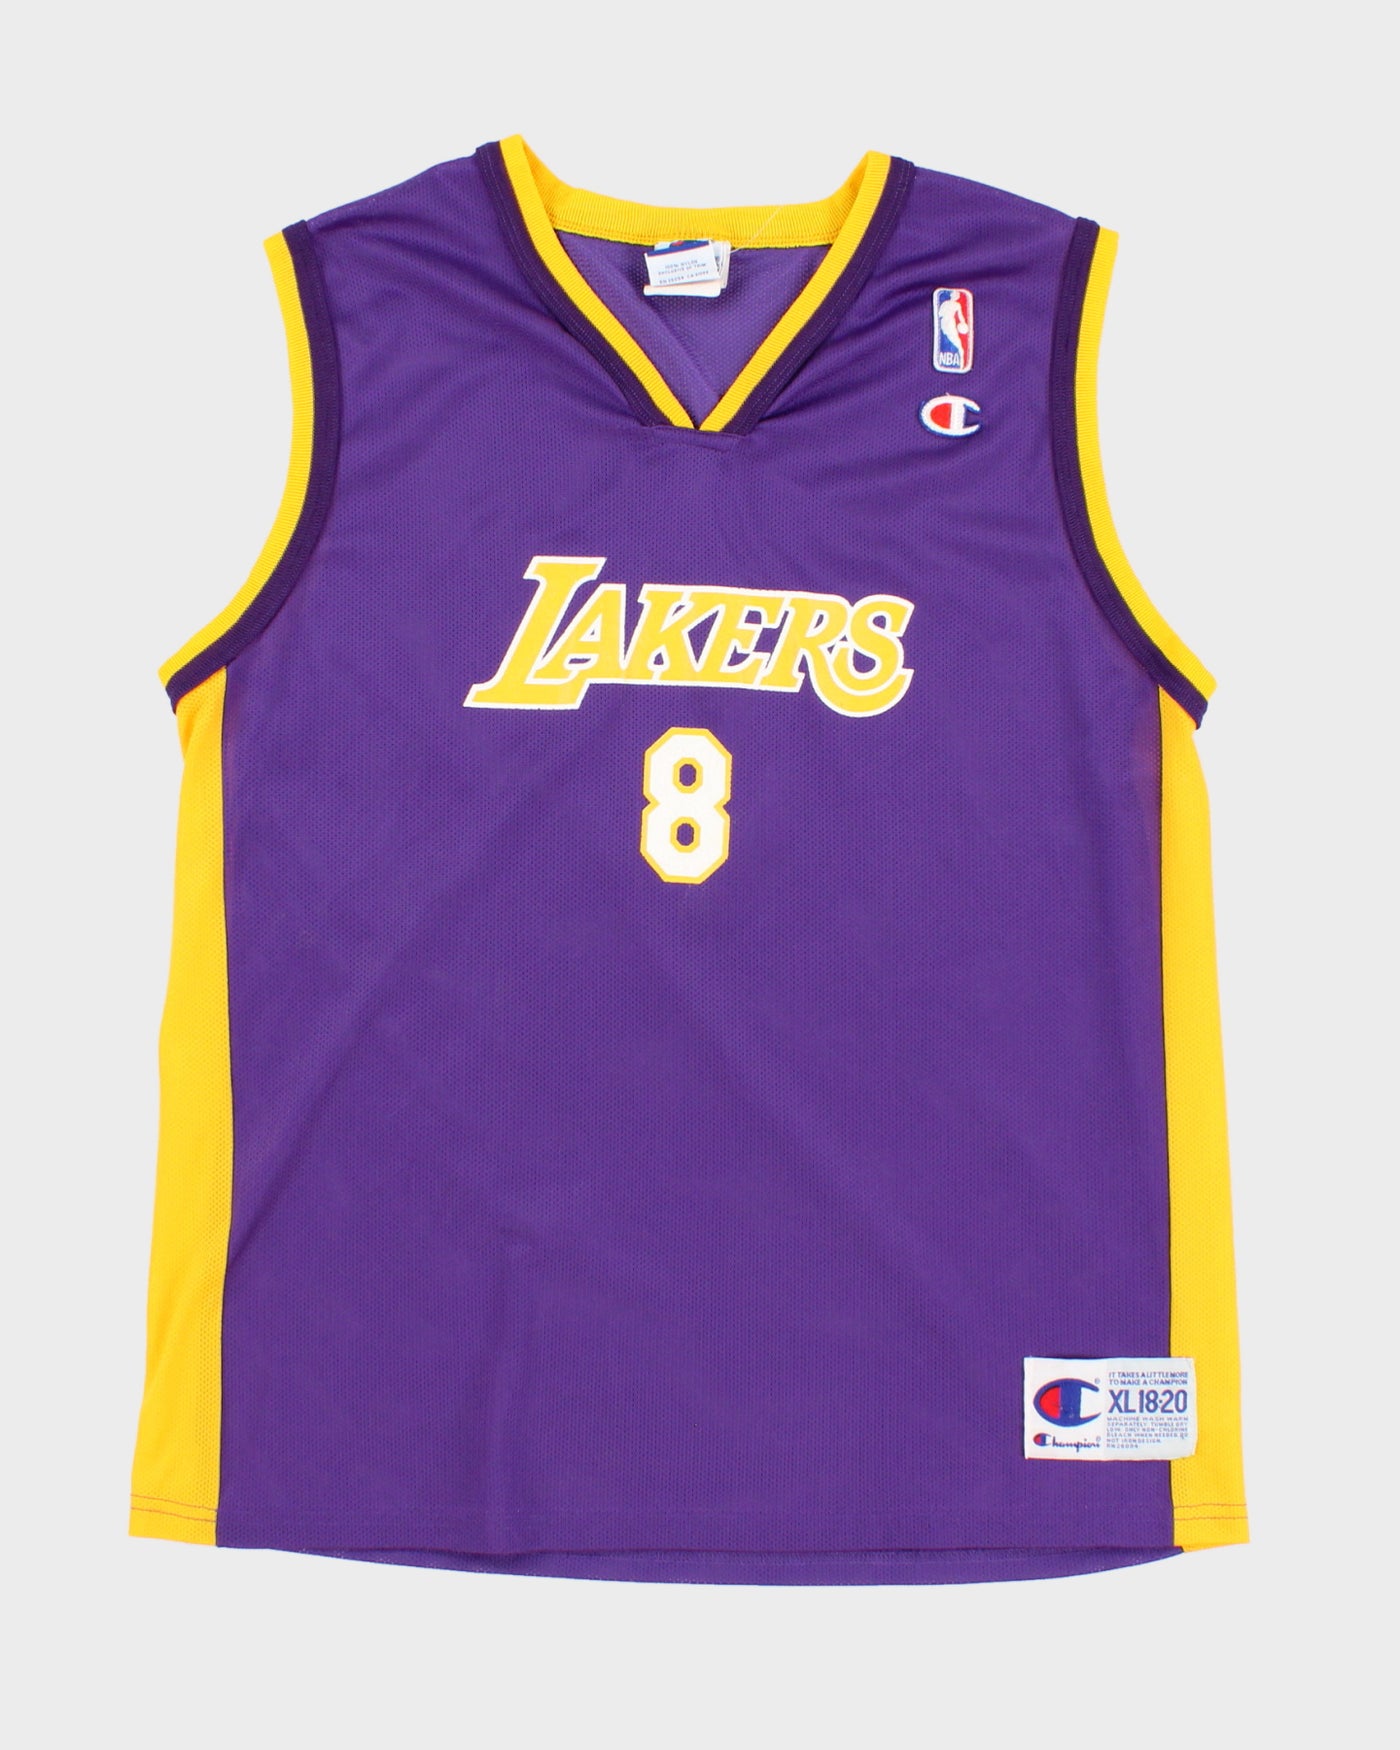 Champion Los Angeles Lakers Kobe Bryant #8 NBA Basketball Jersey - Youth XL